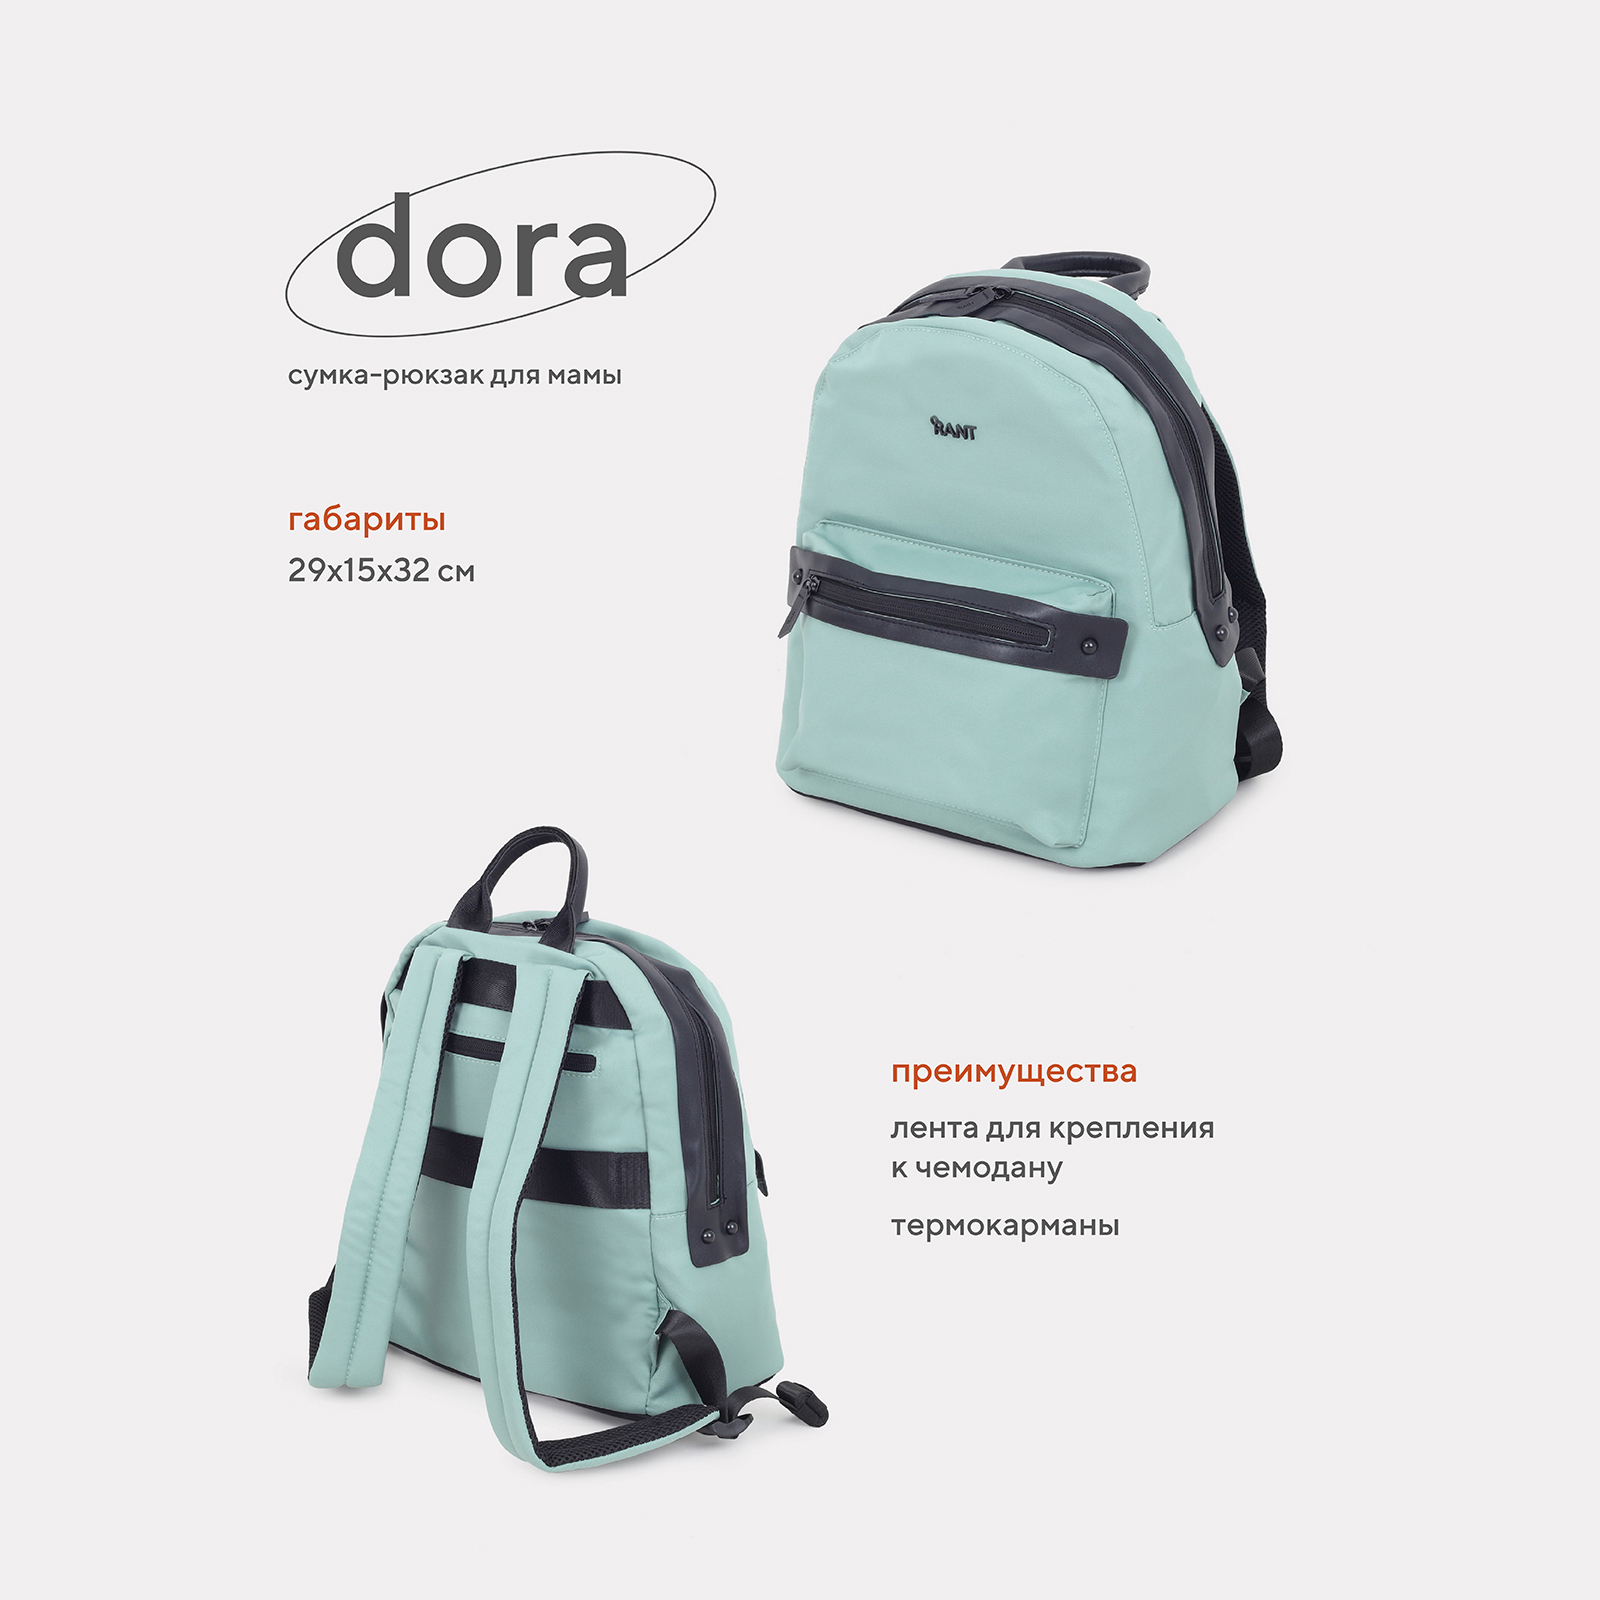 Сумка-рюкзак для мамы RANT Dora RB009 Green рюкзак для коляски peg perego backpack green